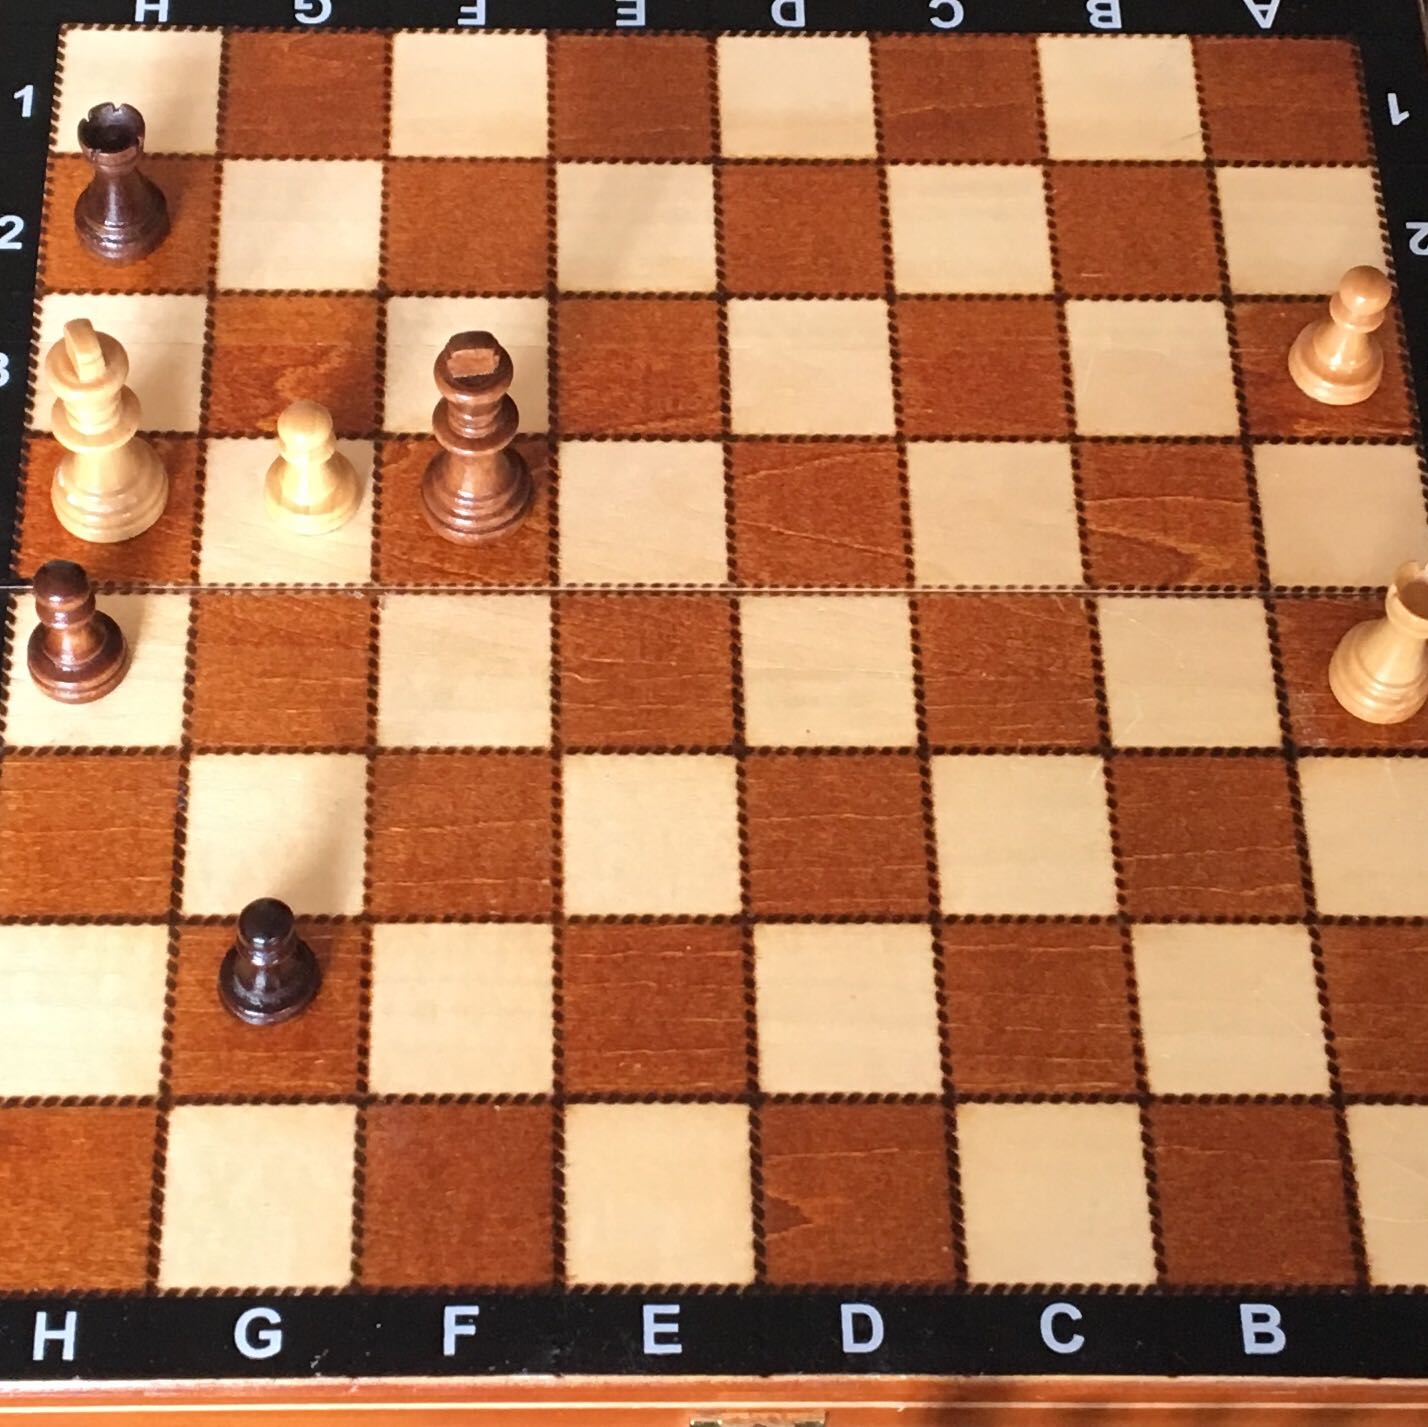 Patt Im Schach